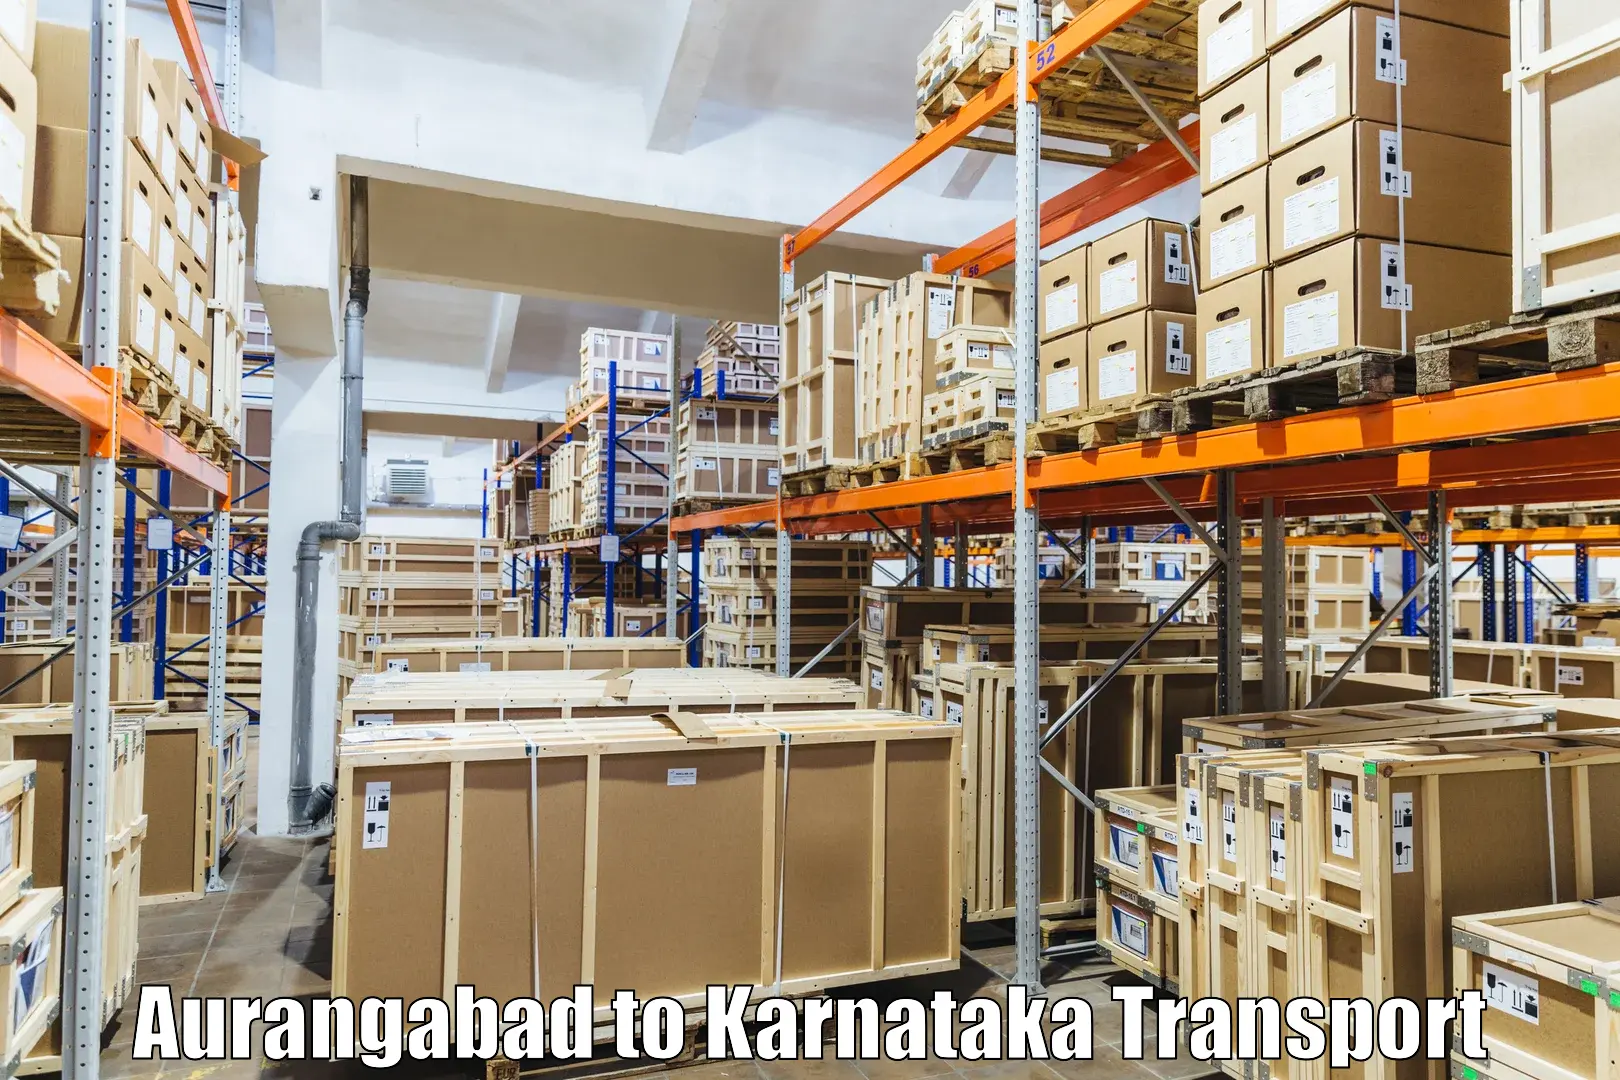 Truck transport companies in India Aurangabad to Belagavi